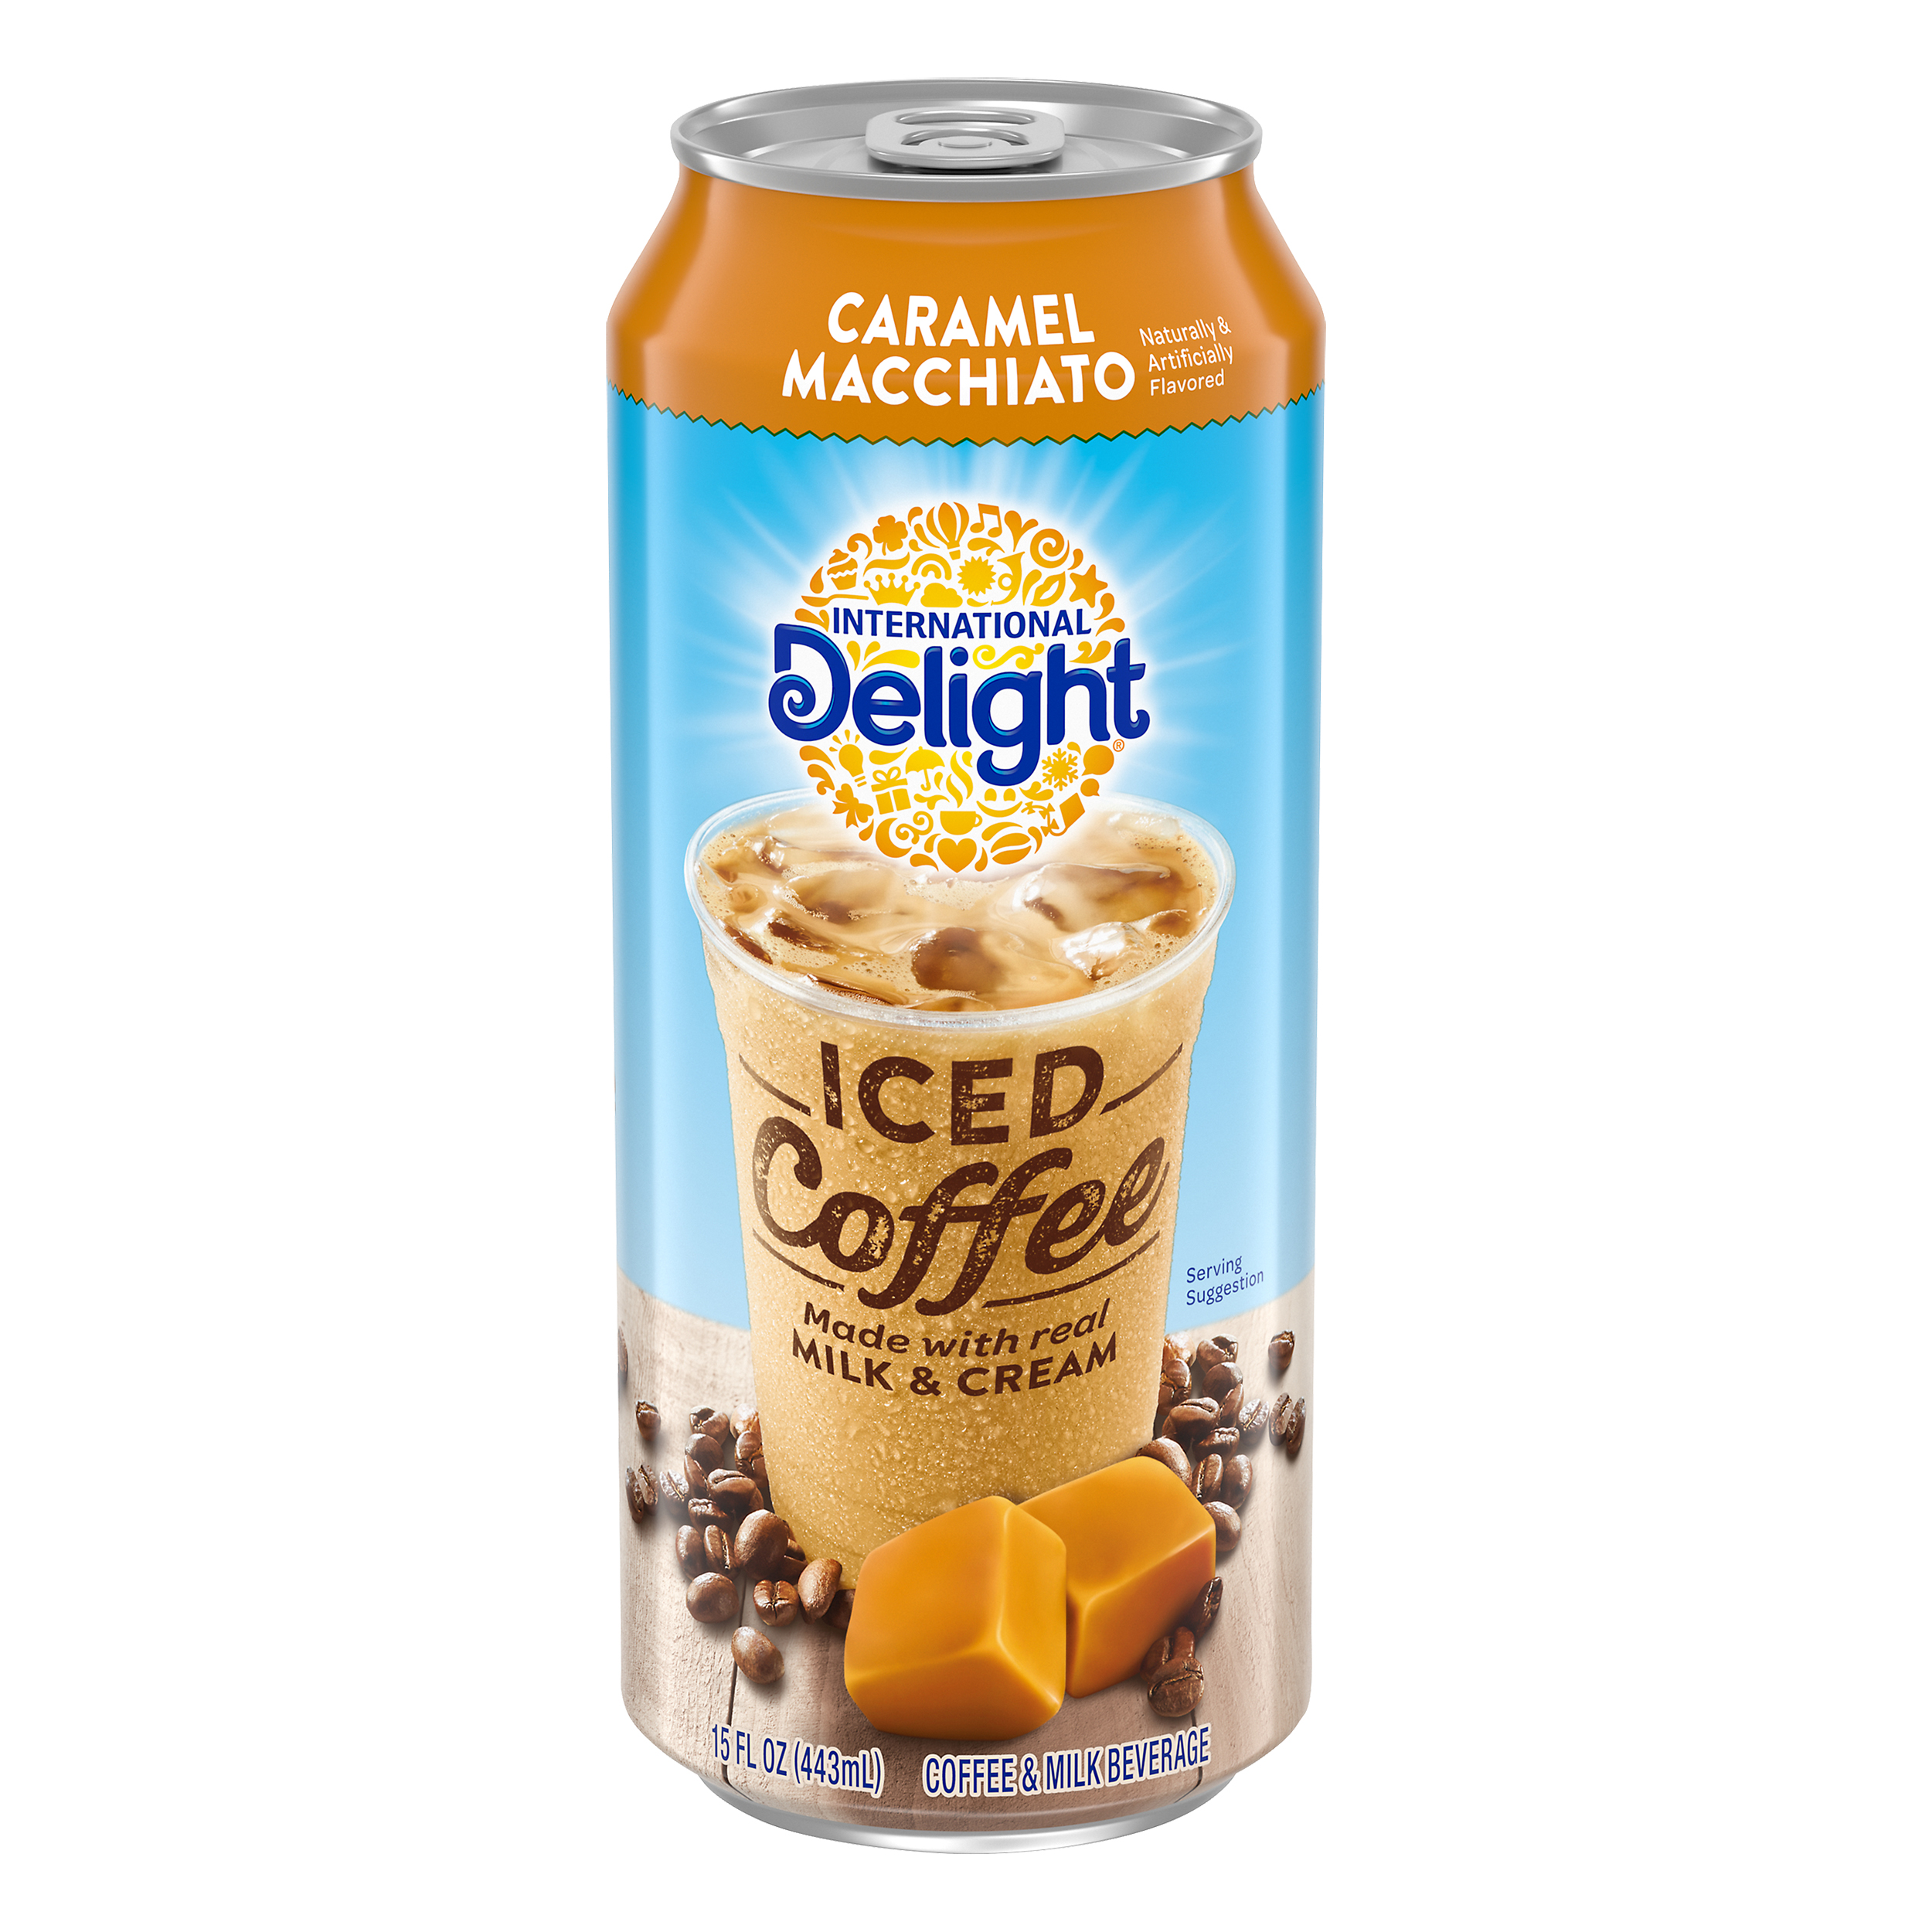 International Delight Iced Coffee, Caramel Macchiato 12 units per case 15.0 fl